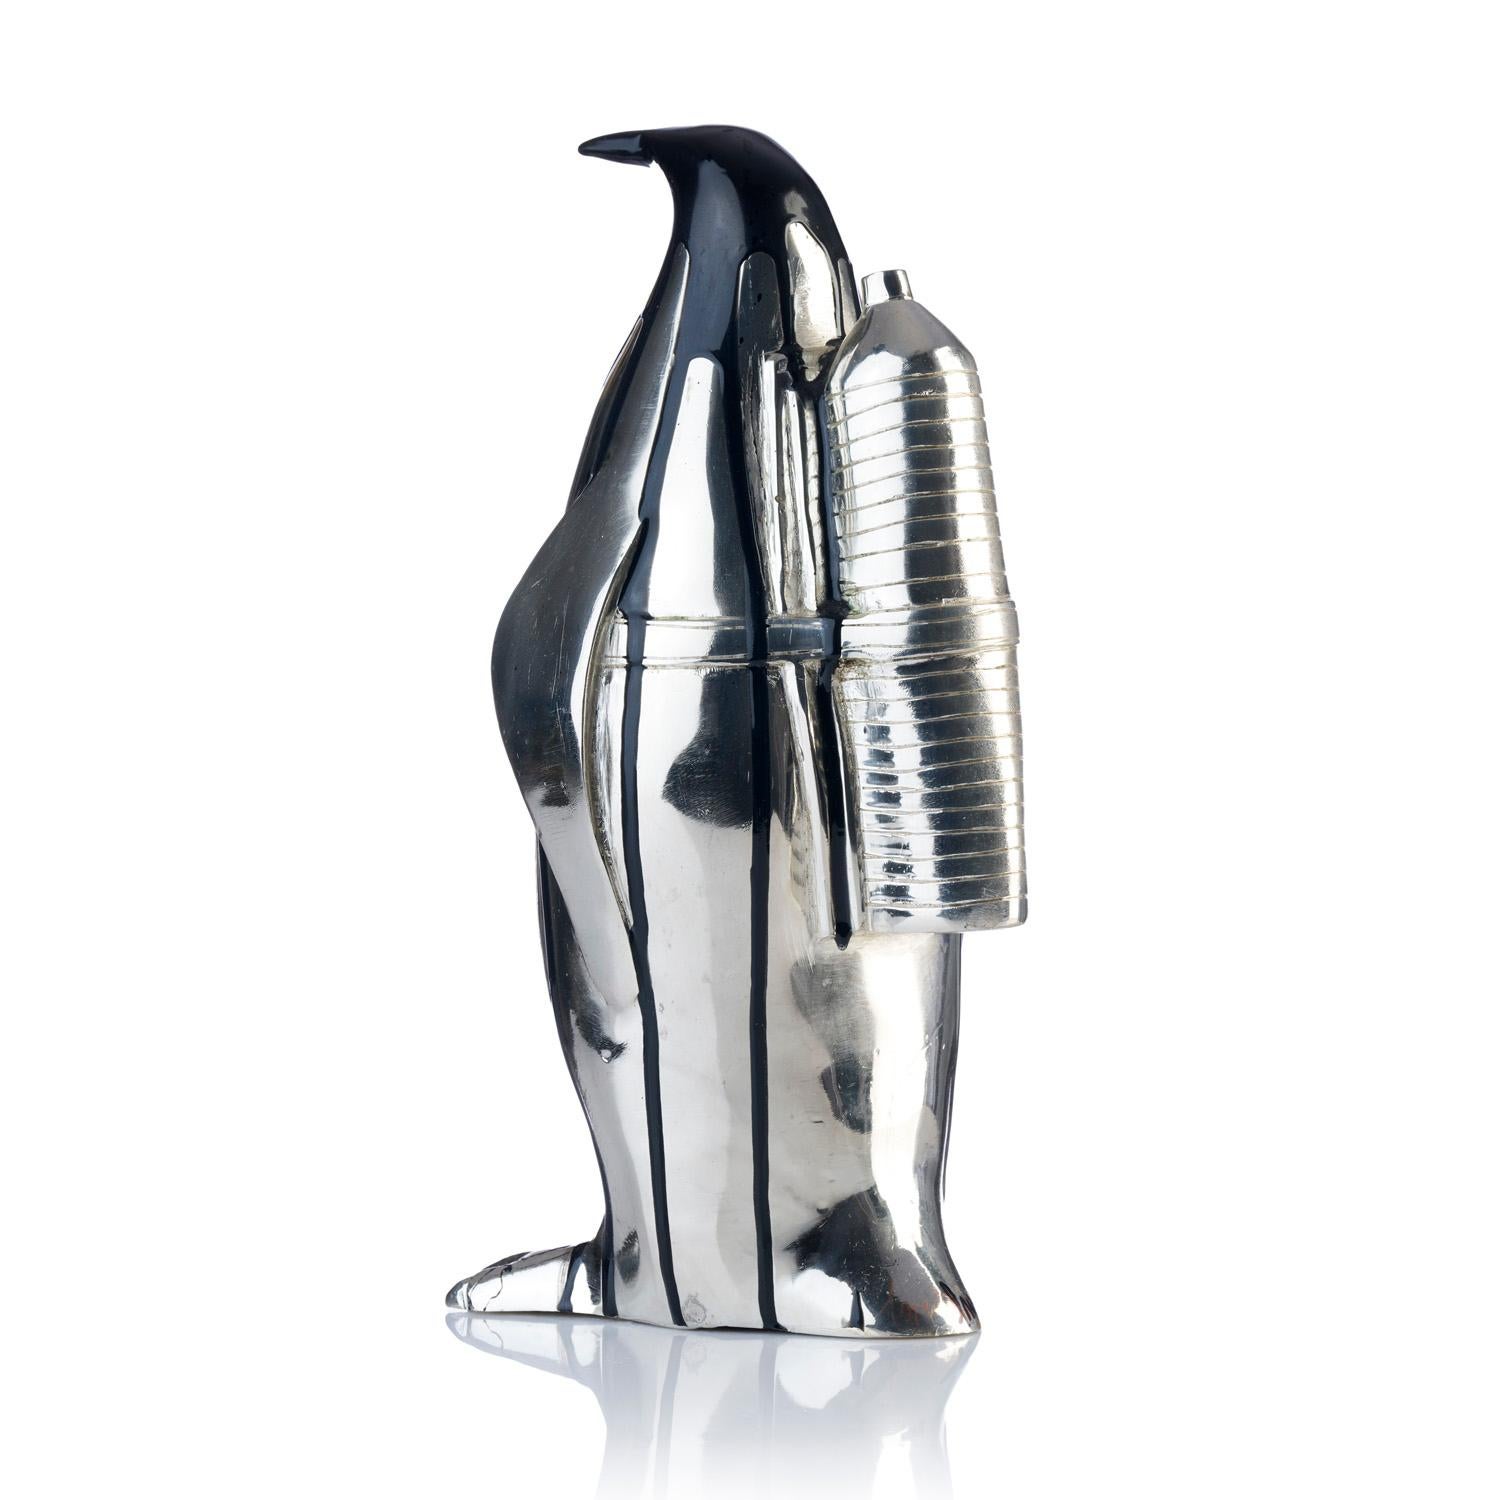 Cloned Penguin with pet bottle (black)  - Pop Art Sculpture by William Sweetlove